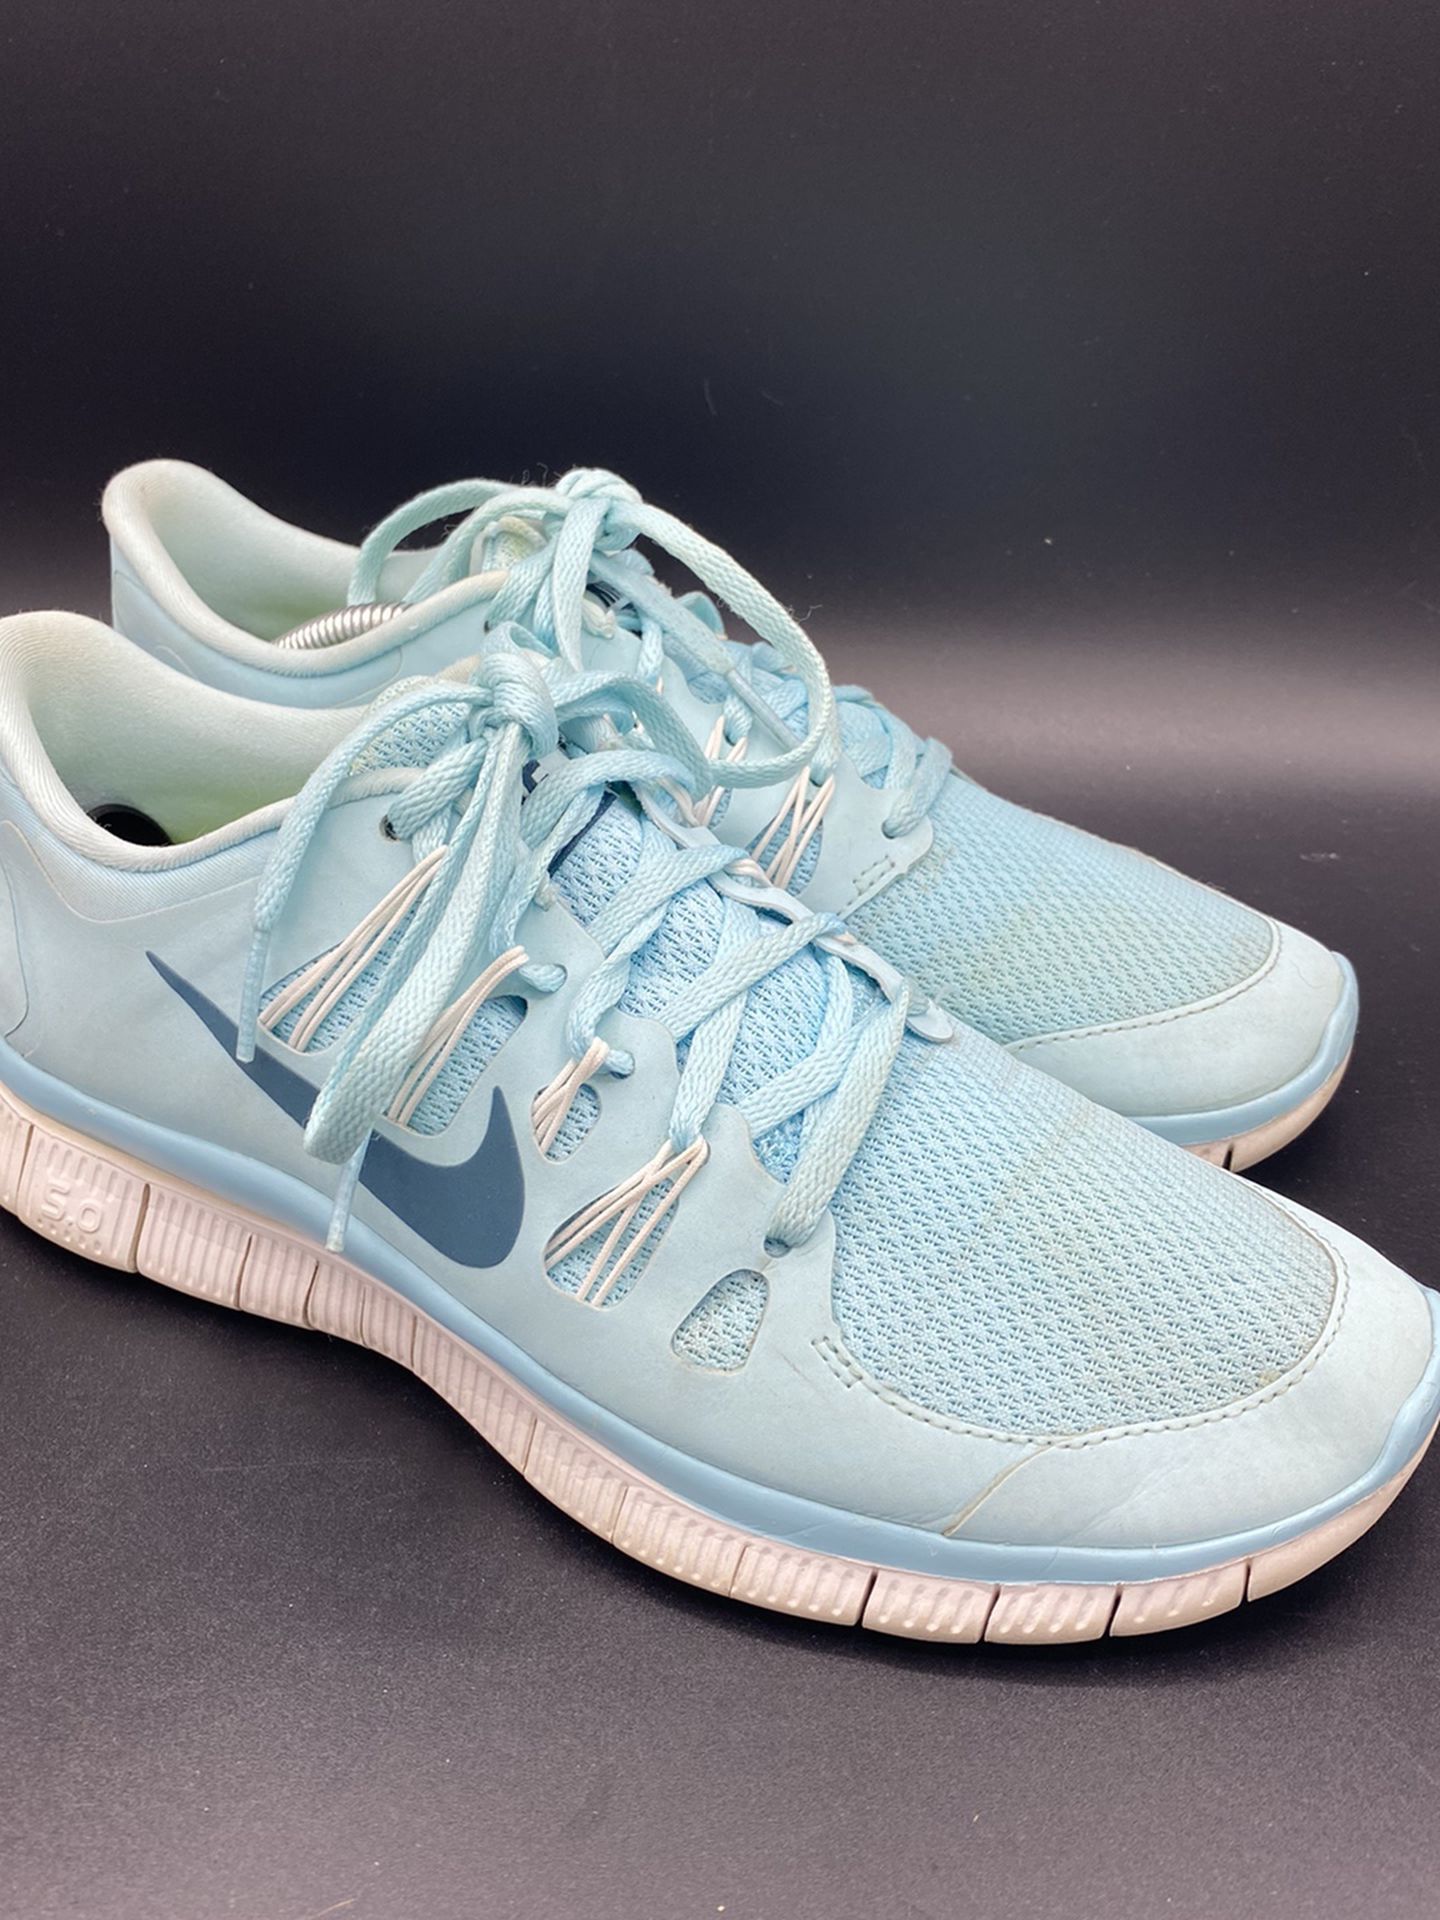 Nike Free 5.0 Women's 8.5 Turquoise Blue Teal Athletic Running Shoe 580591-431